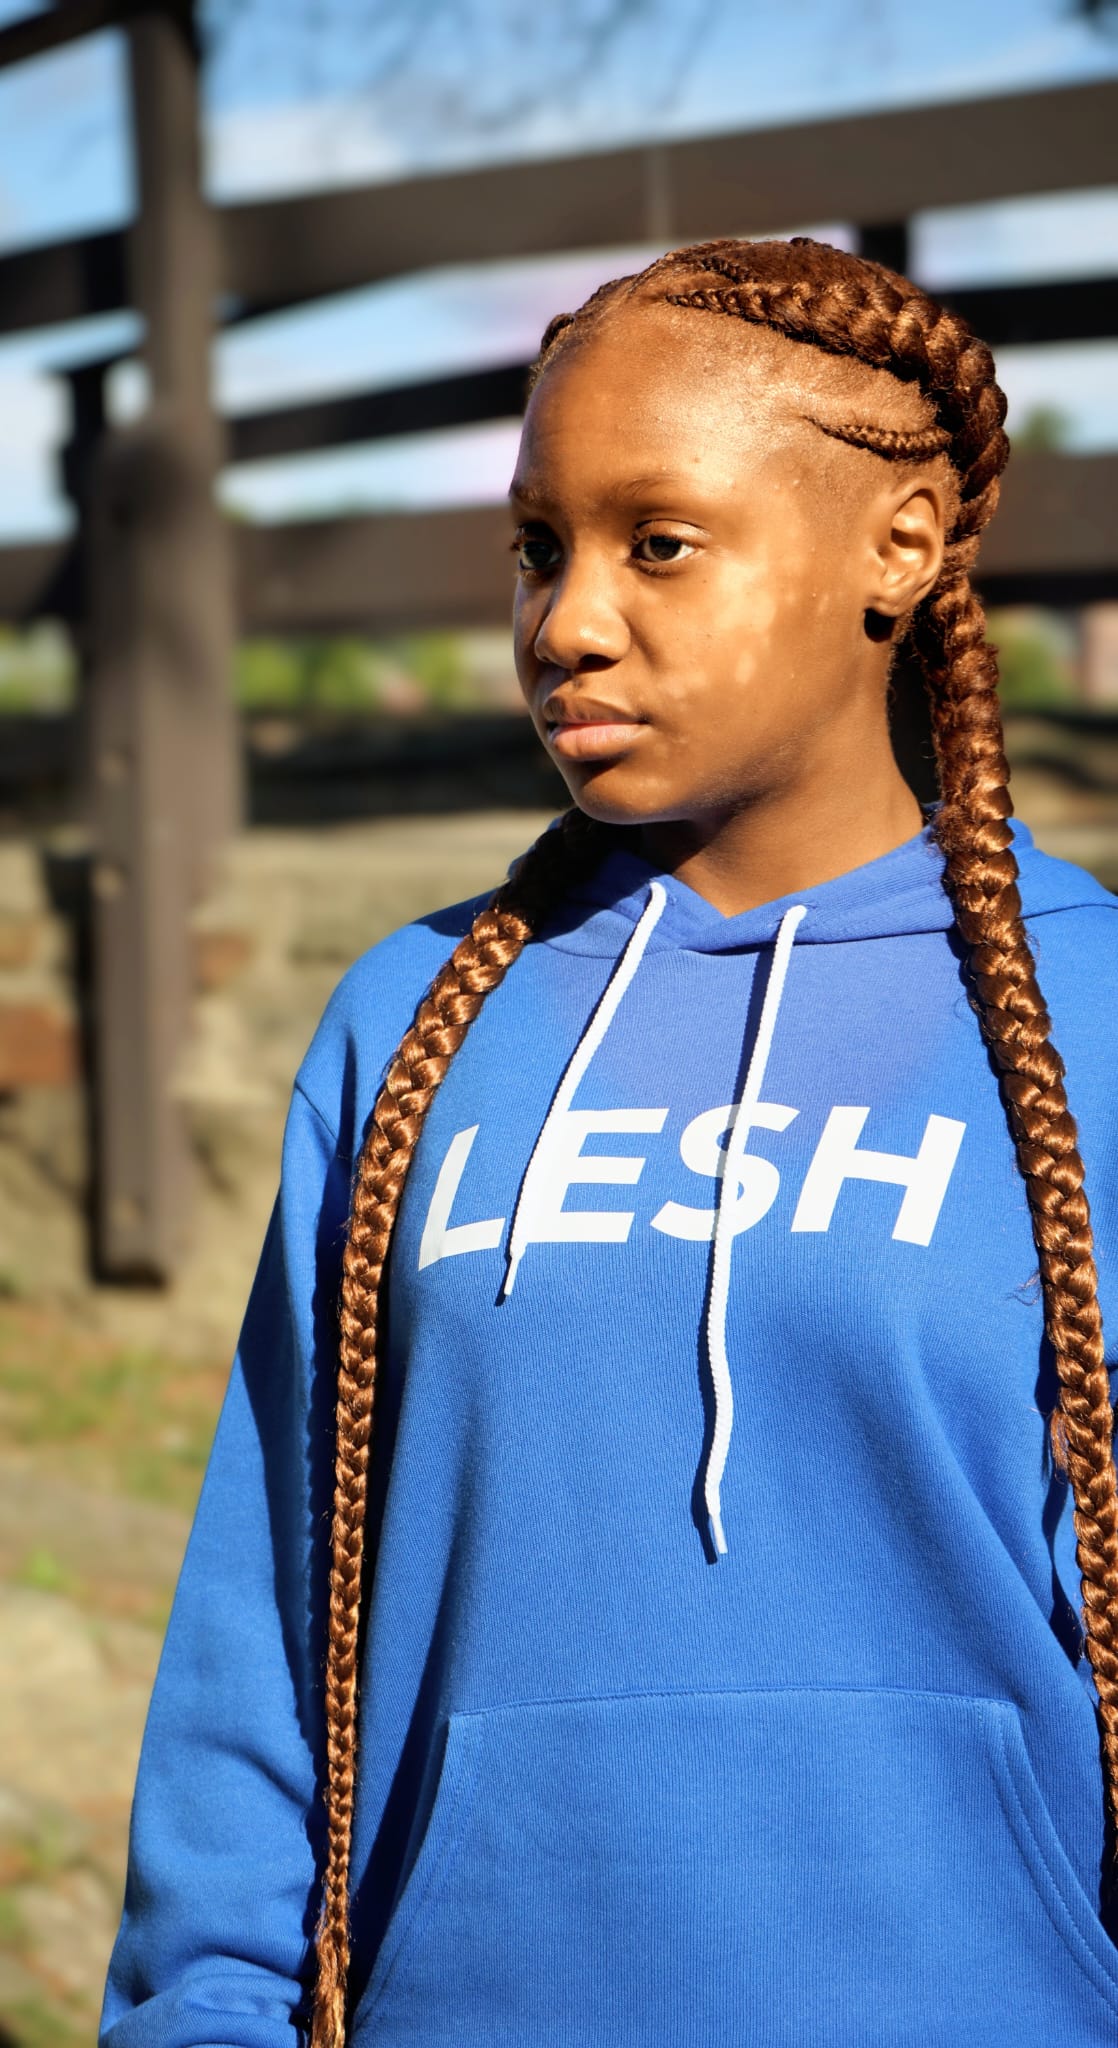 LESH Logo Hoodie